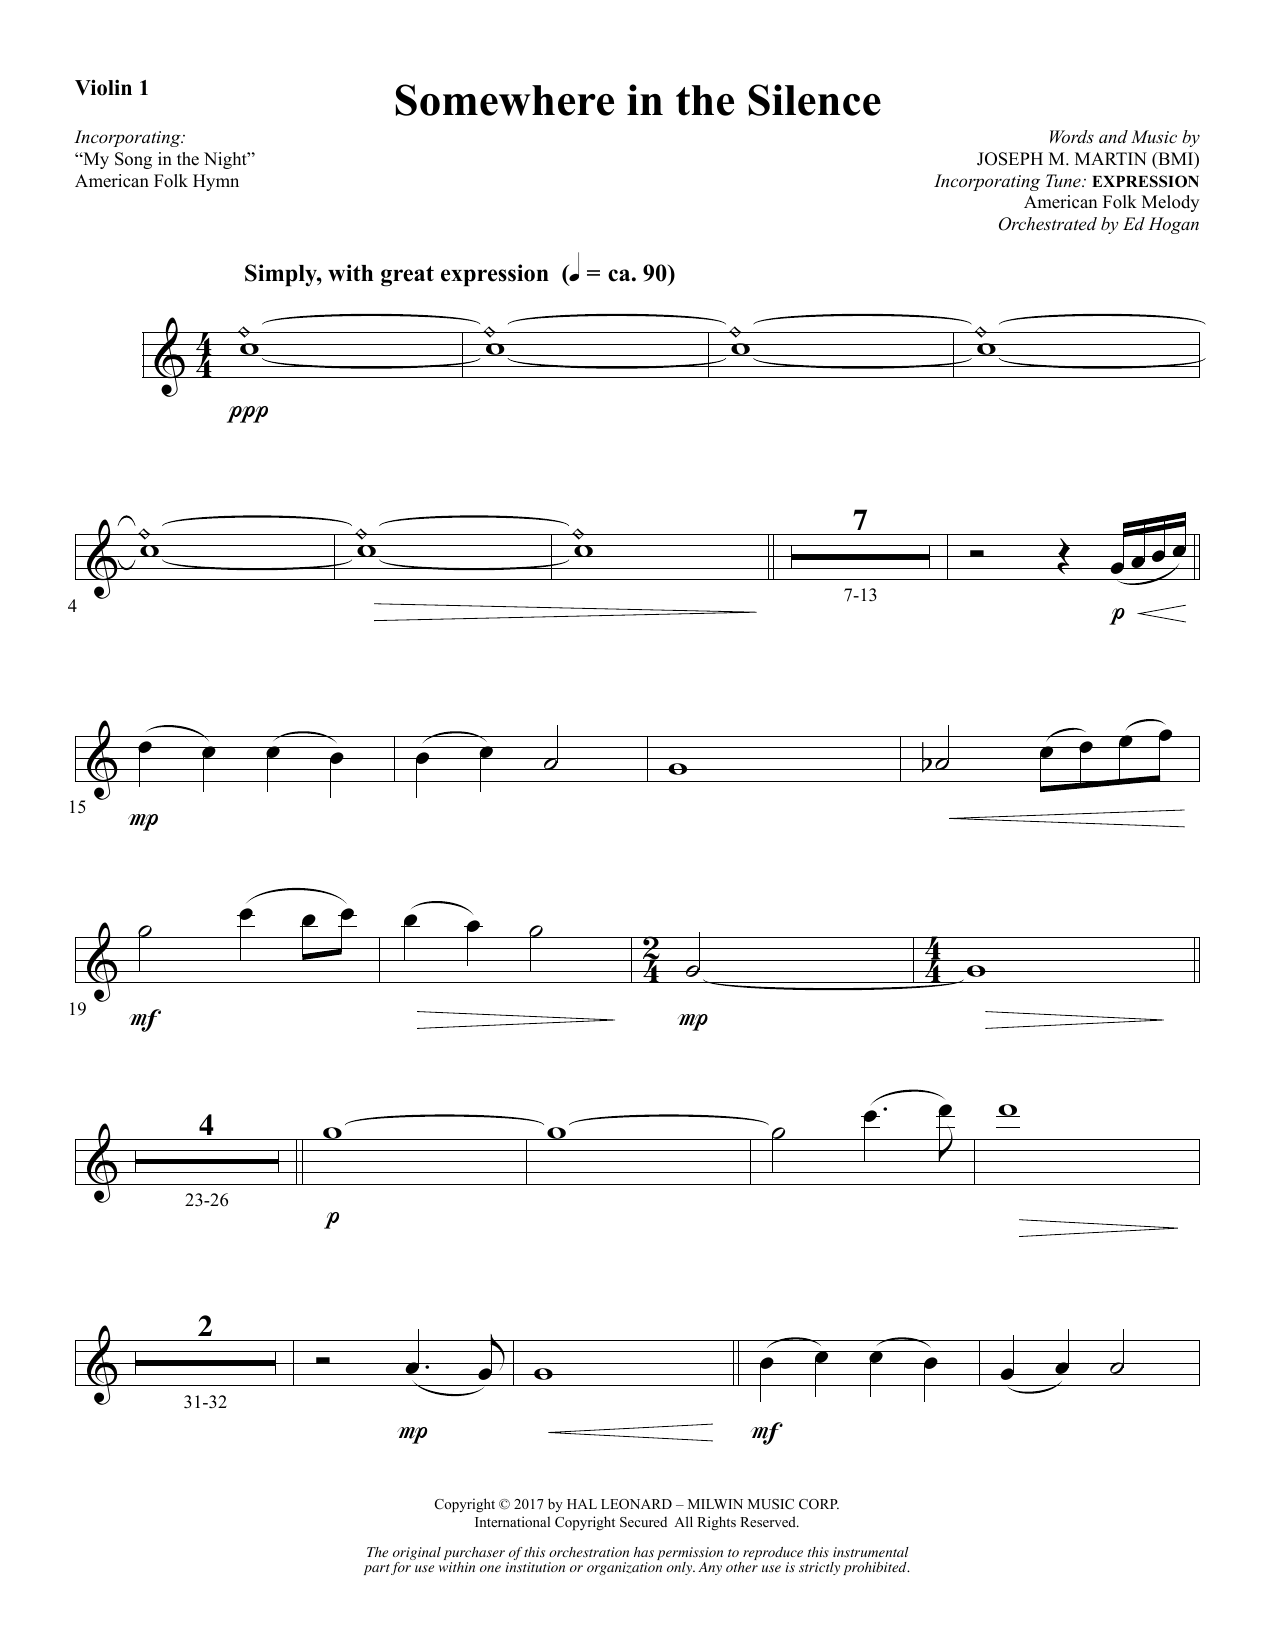 Download Joseph M. Martin Somewhere in the Silence - Violin 1 Sheet Music